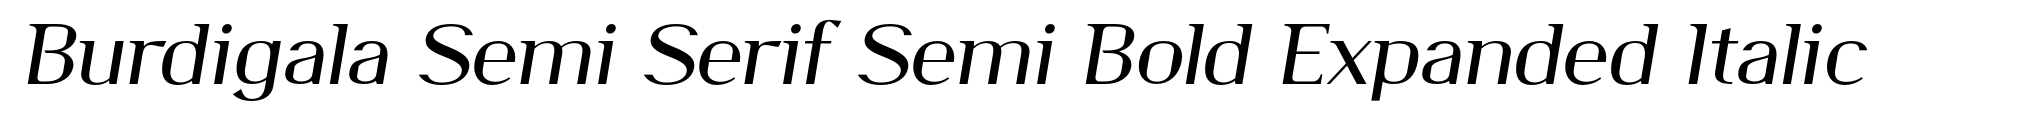 Burdigala Semi Serif Semi Bold Expanded Italic image